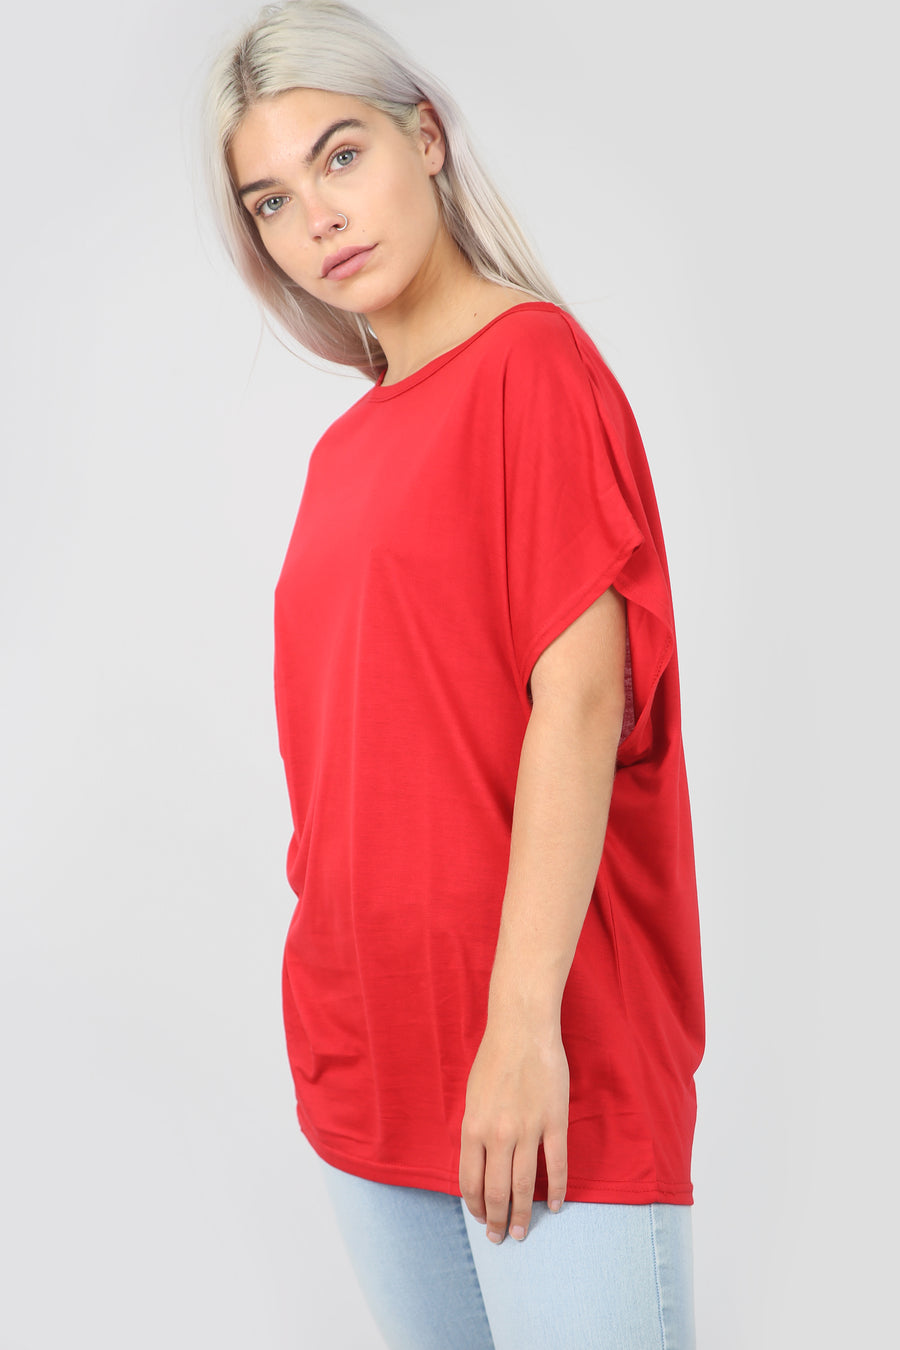 Basic Oversize Red Short Sleeve Tshirt - bejealous-com